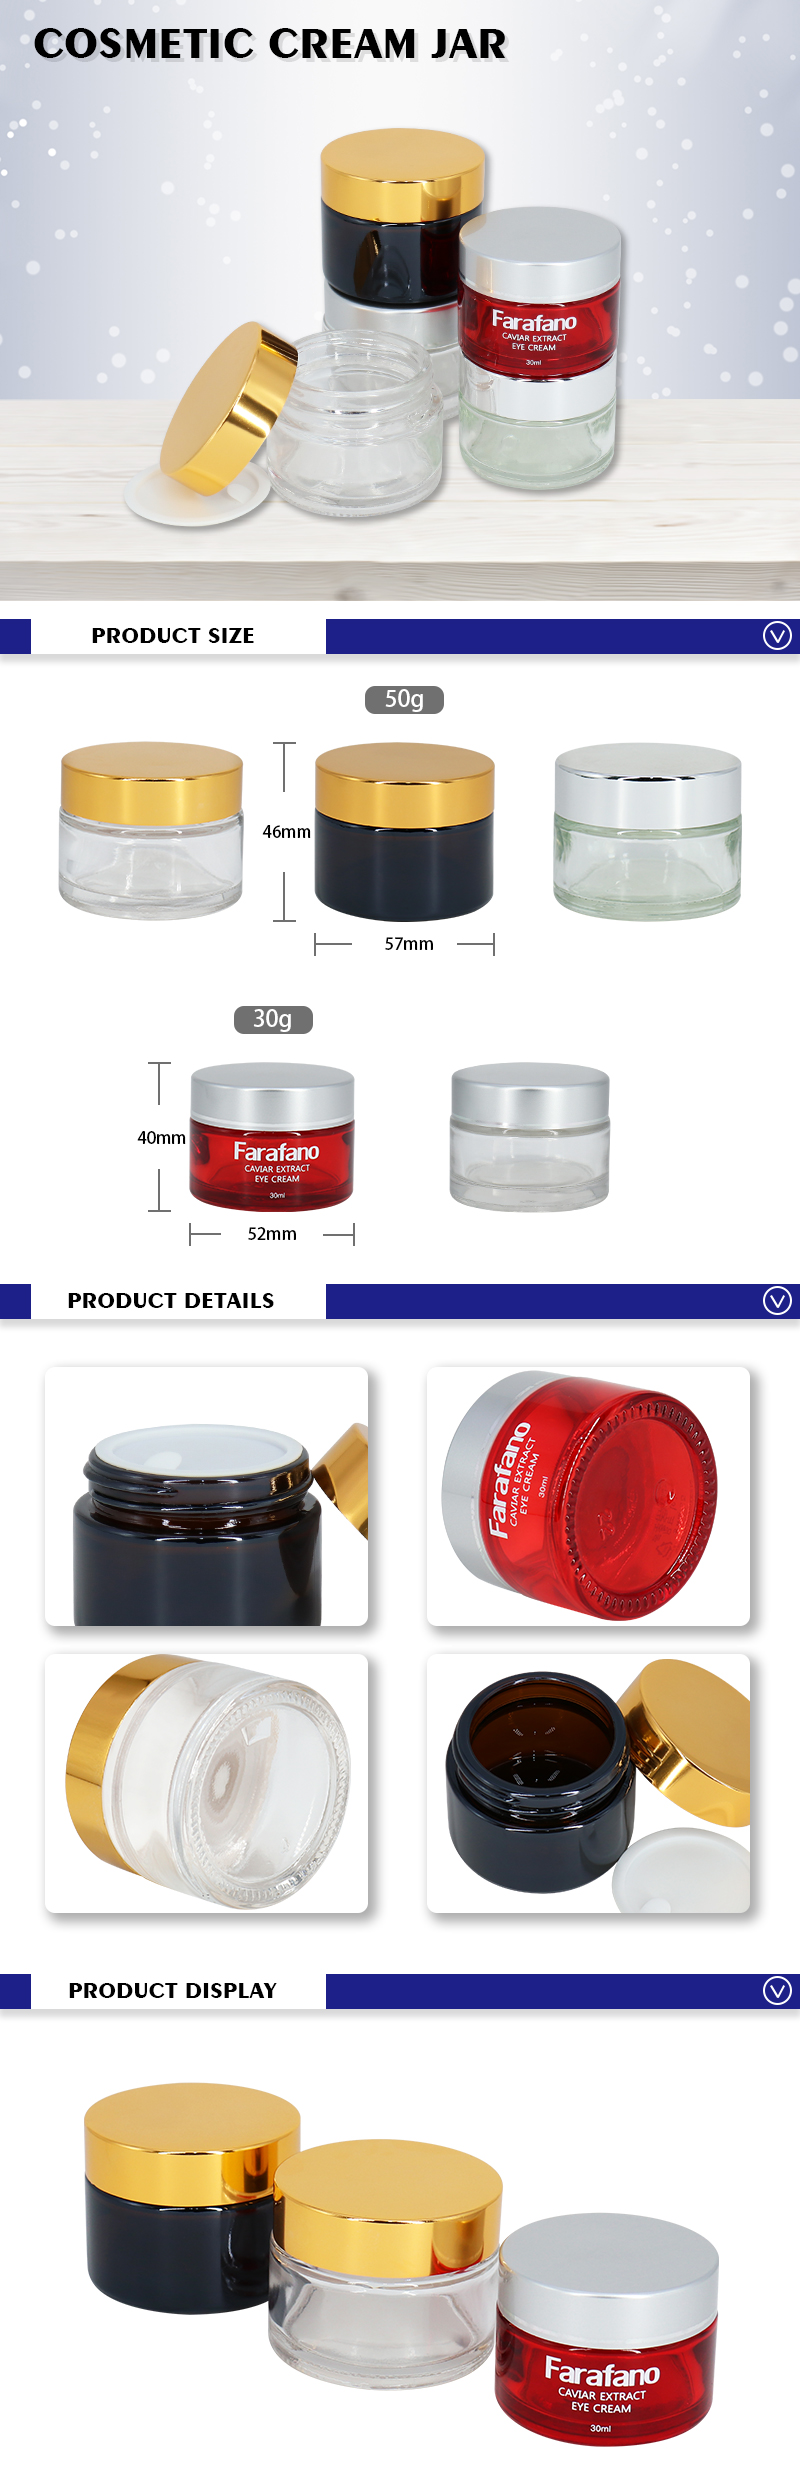 Glass Cosmetic Cream Jar